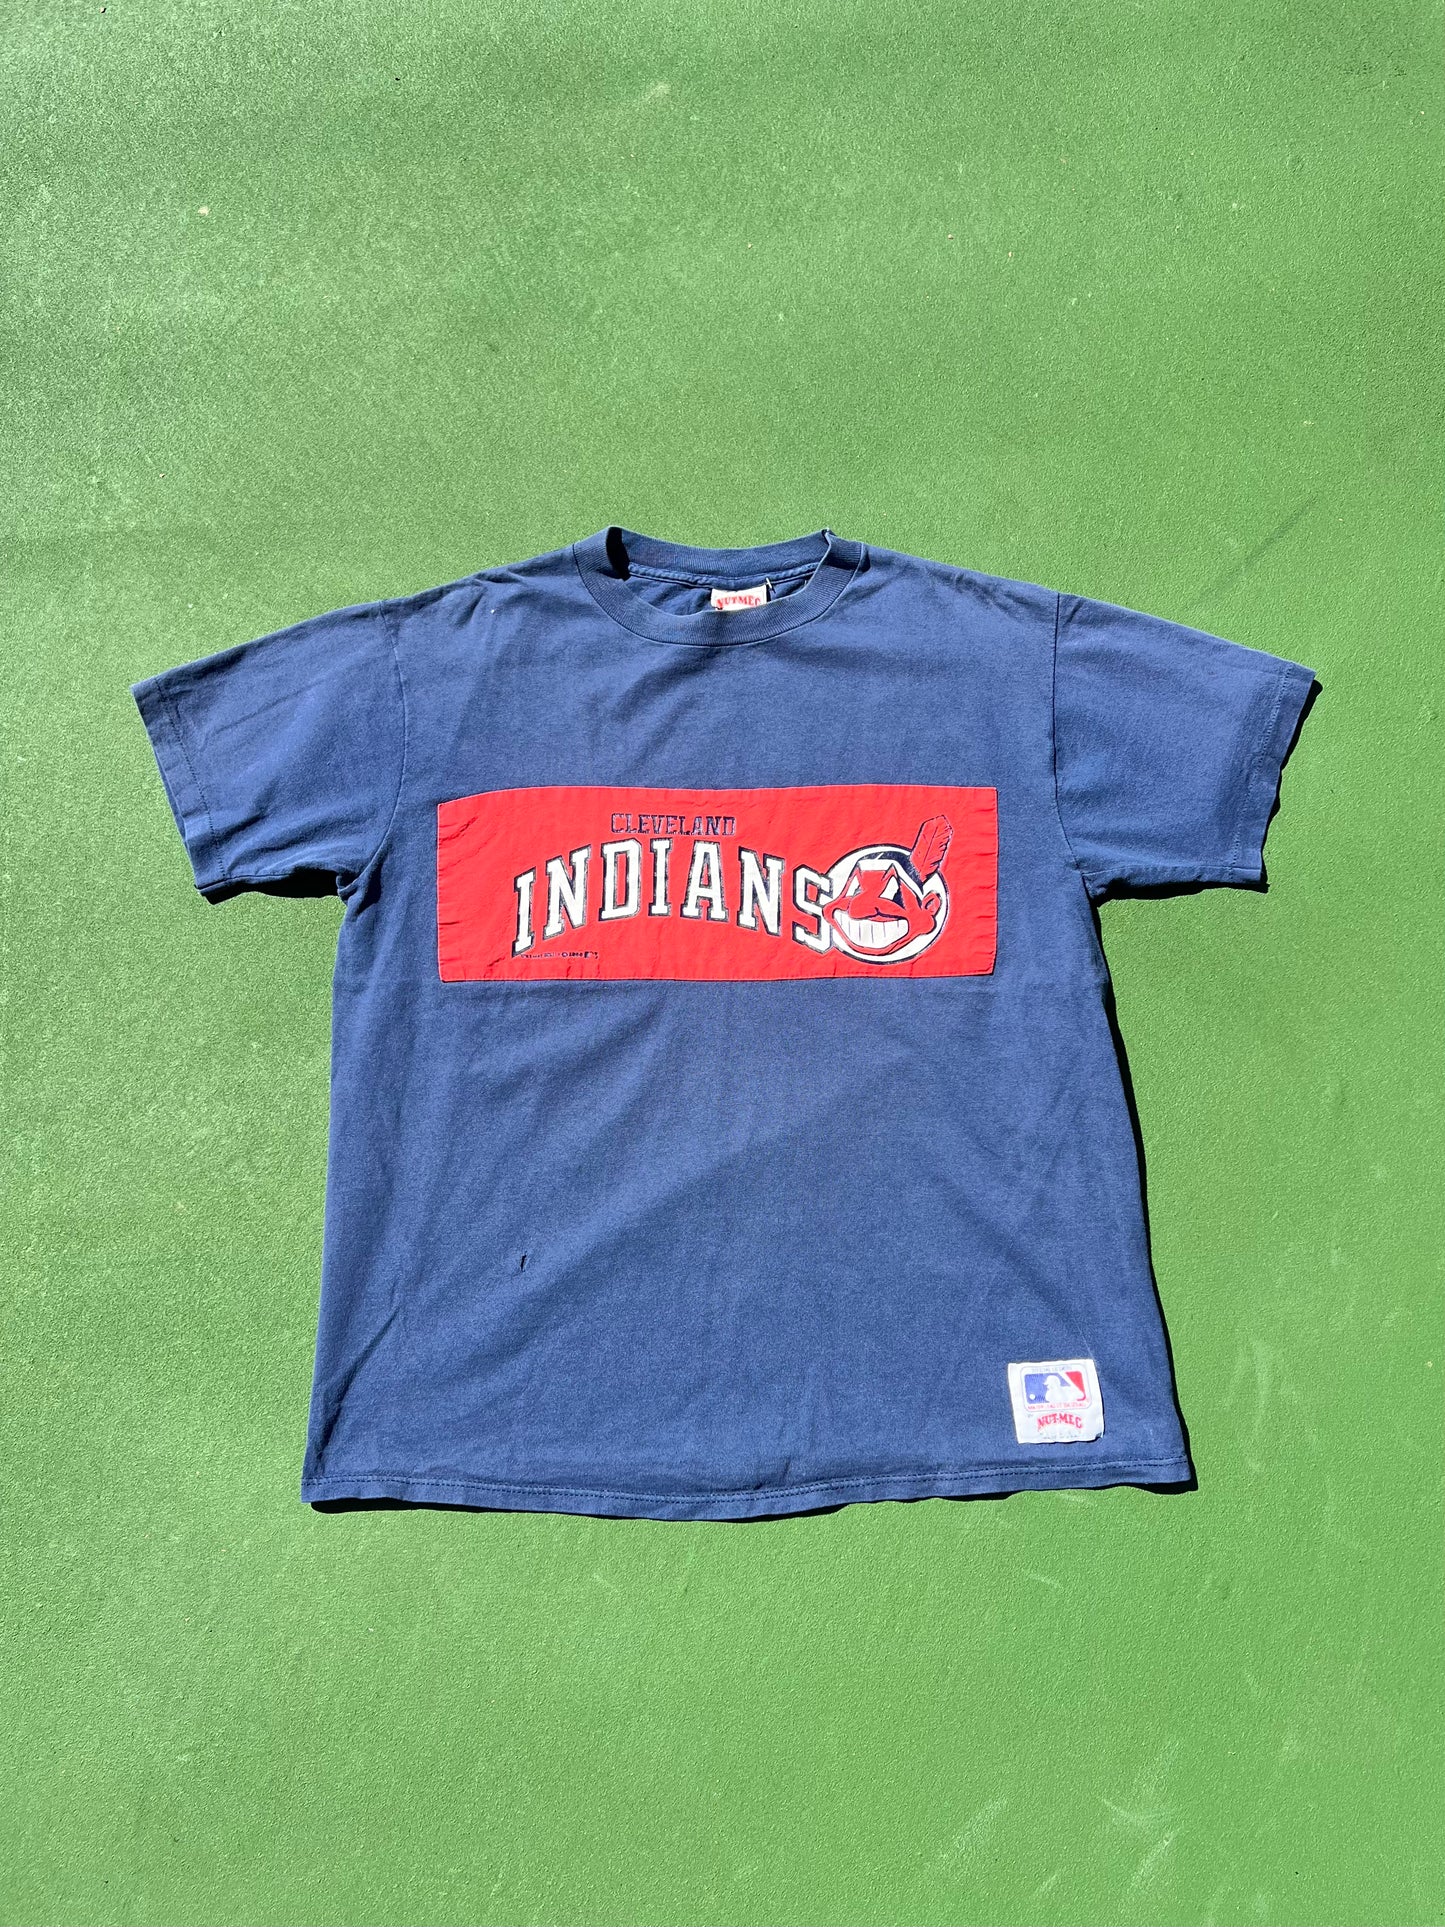 Vintage 90s MLB Cleveland Indians Tee Shirt